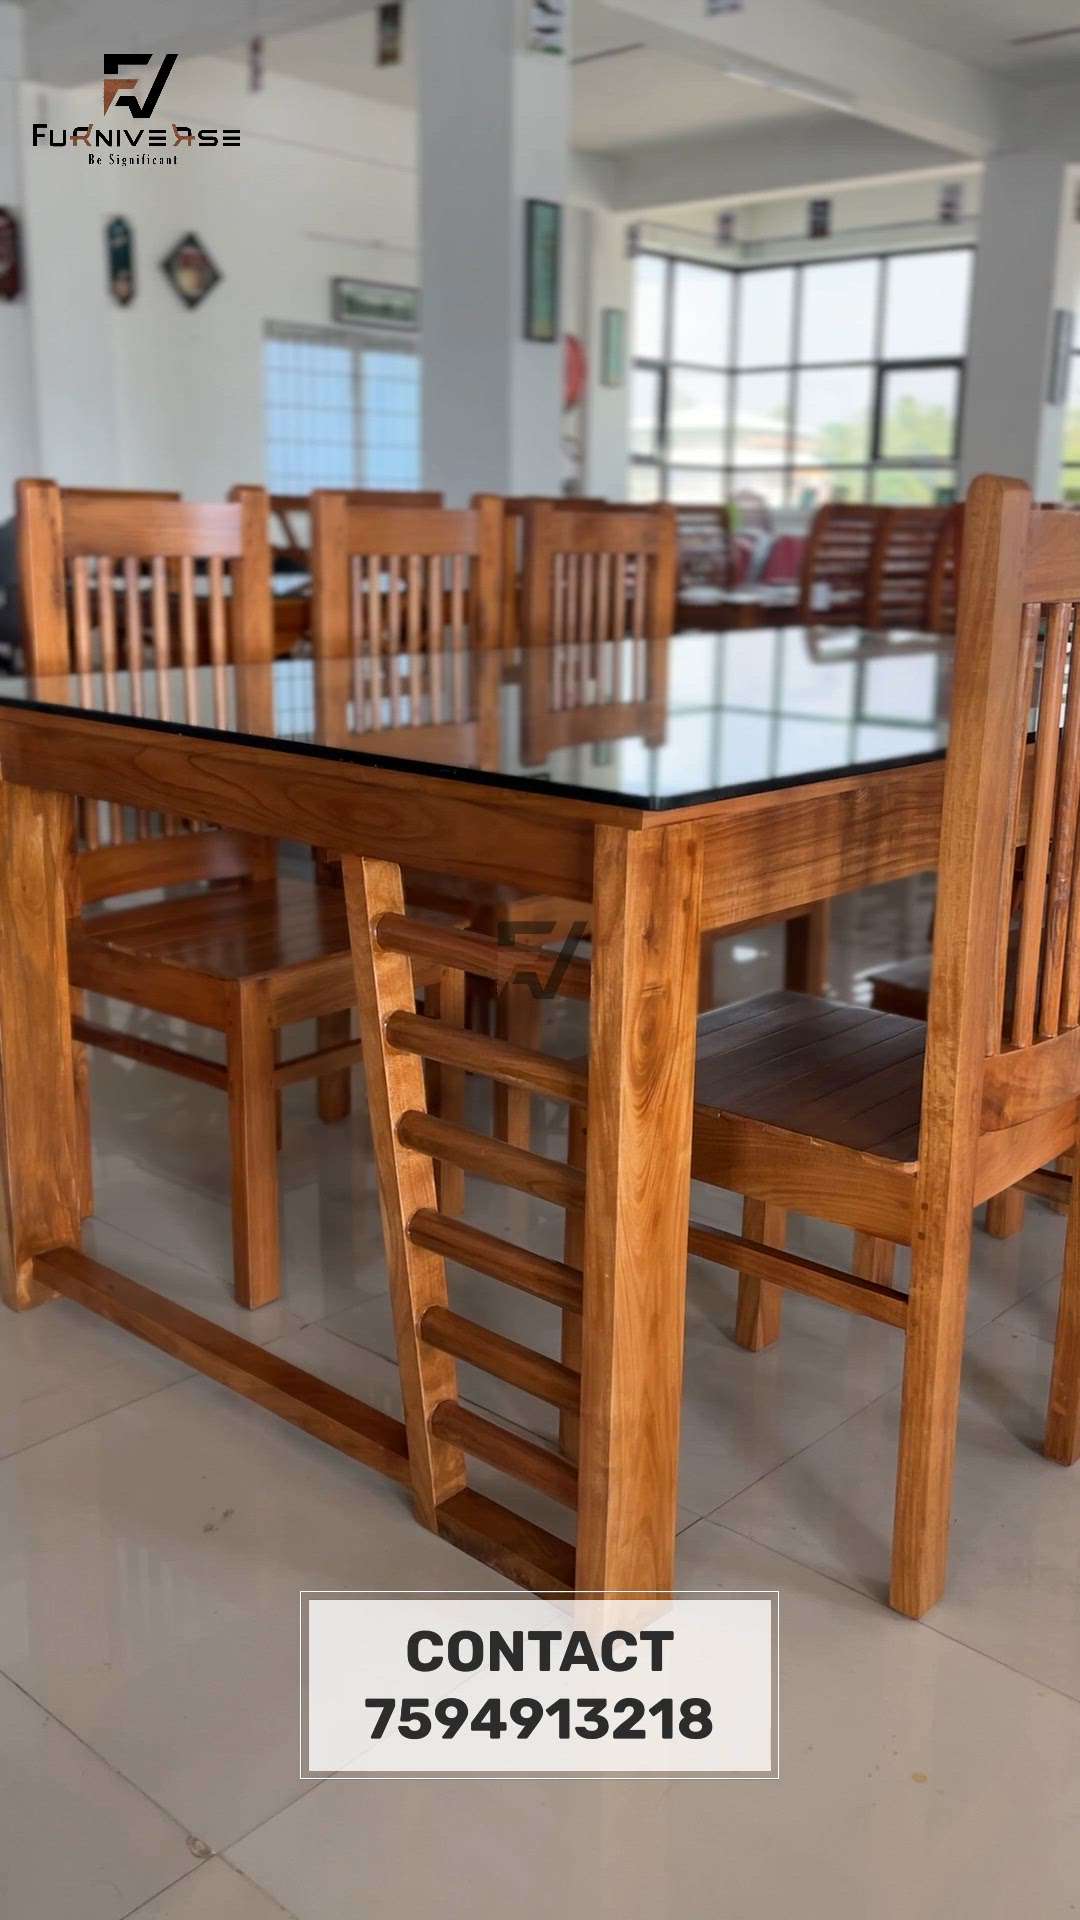 #DiningTable #DiningTableAndChairs #DINING_TABLE #DiningChairs #diningarea #dining  #RectangularDiningTable #Palakkad #kozhinjampara #chittur #nallepilly #thathamangal #kodumbu #para #ellappuly #pirayiri #kallekkad  #Designs 
#furnitures #furnitureanddiningtable #furnituredesigner #malampuzha #mundur #puduppariyaram #chair&table #Palakkad #Palakkadcarpenter #beautifulhomeinteriors #vadakkencherry #alathur #kuzhalmannan #nemmara #kollengode #koduvayur #chandranagar #pudussery #walayar #Coimbatore #pollachi #ooty #tiruppur #bangalore #Homedecore #homesweethome  #dinningtabledesig #marbletops #glasstop #blackglass #printedglass #